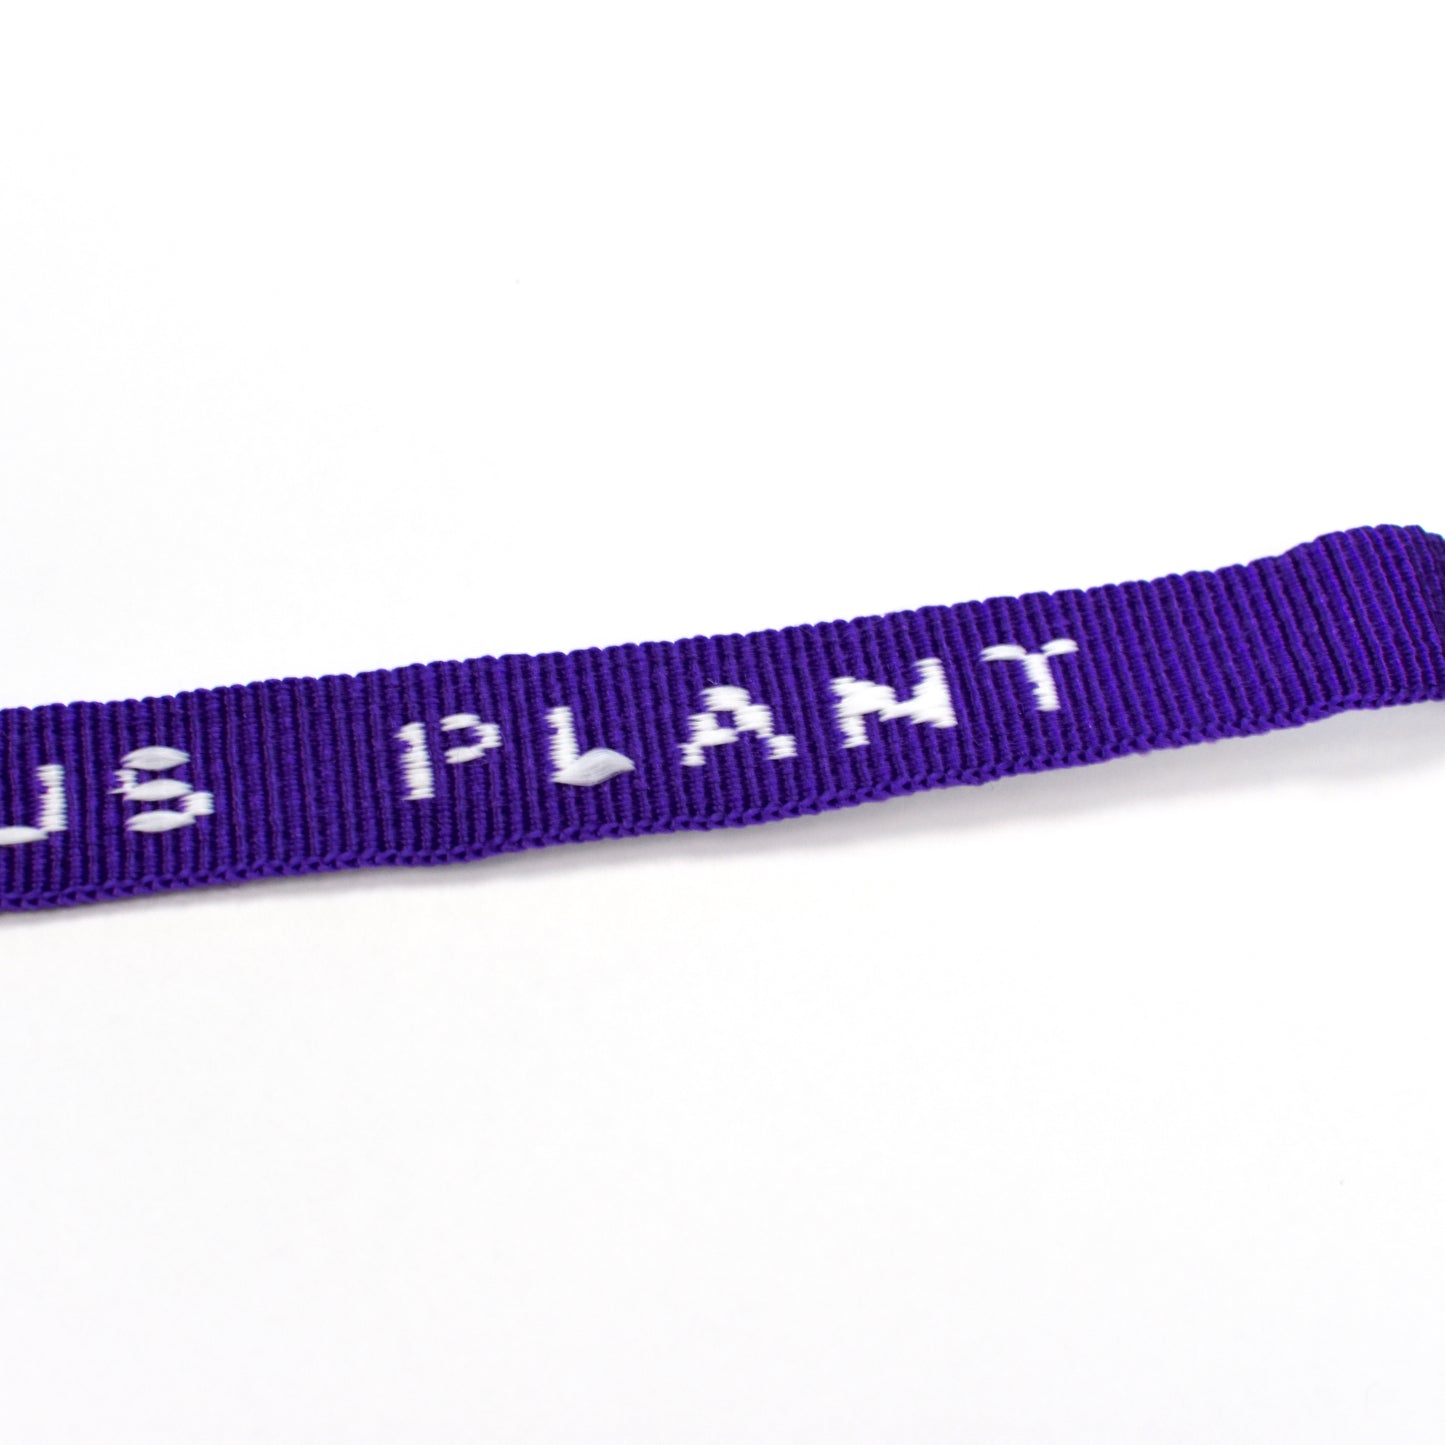 Cactus Plant Flea Market - Purple Cult ID Bracelet